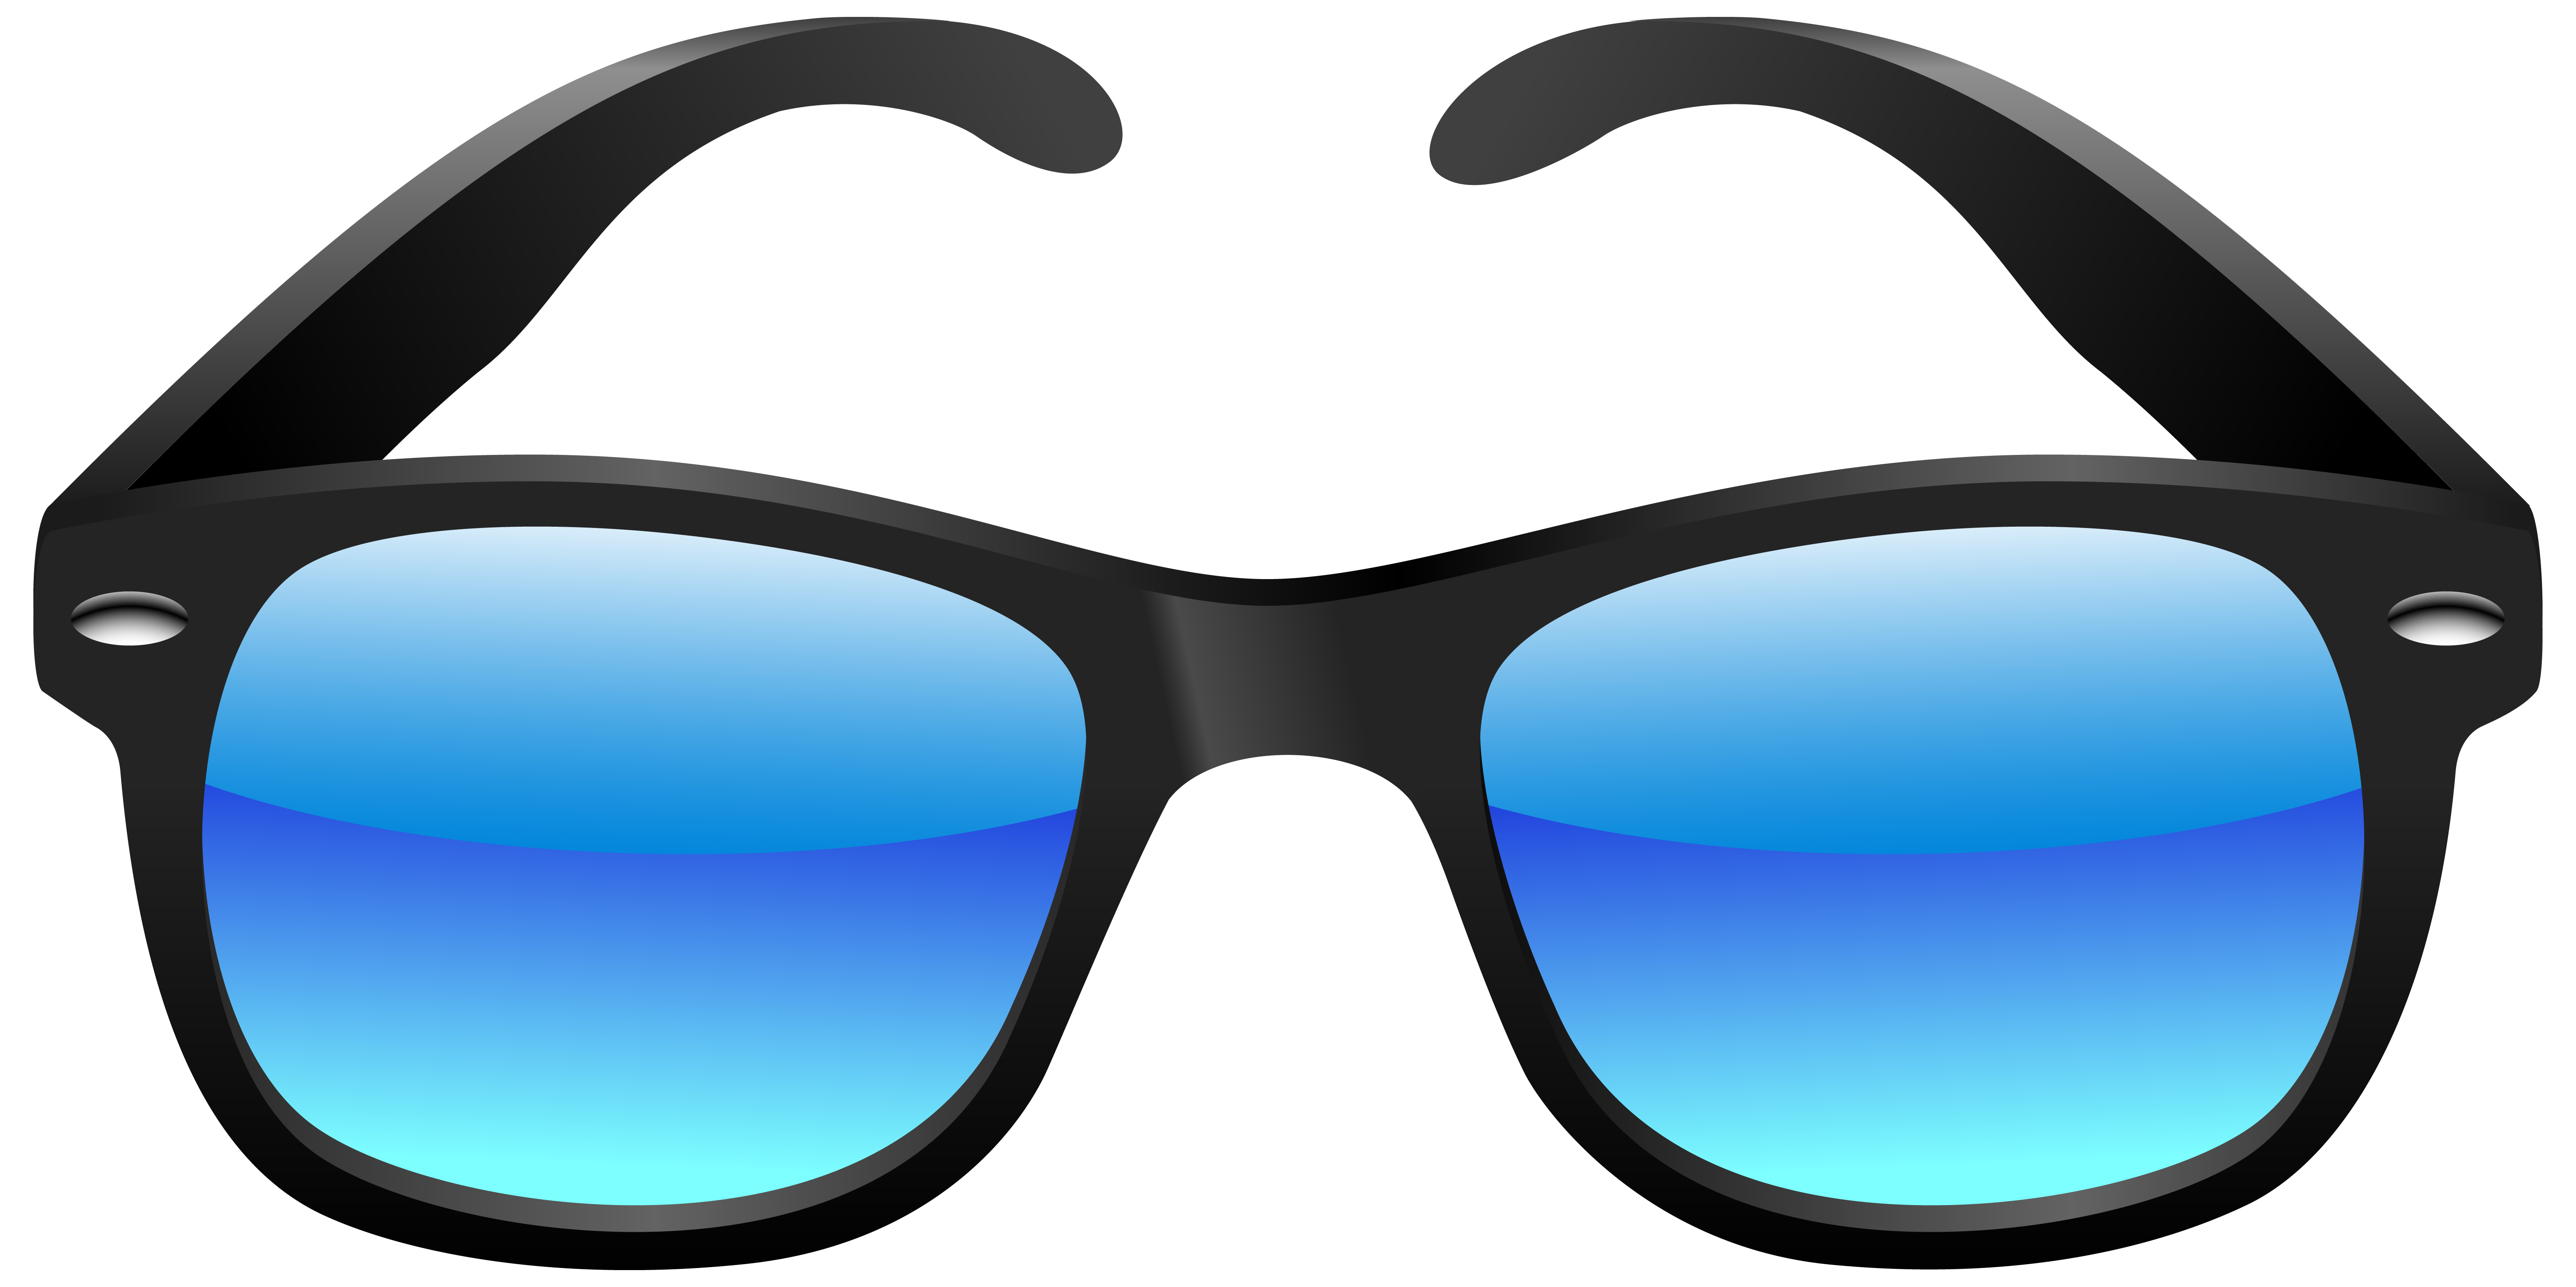 Clip art of sunglasses. Underwear clipart blue